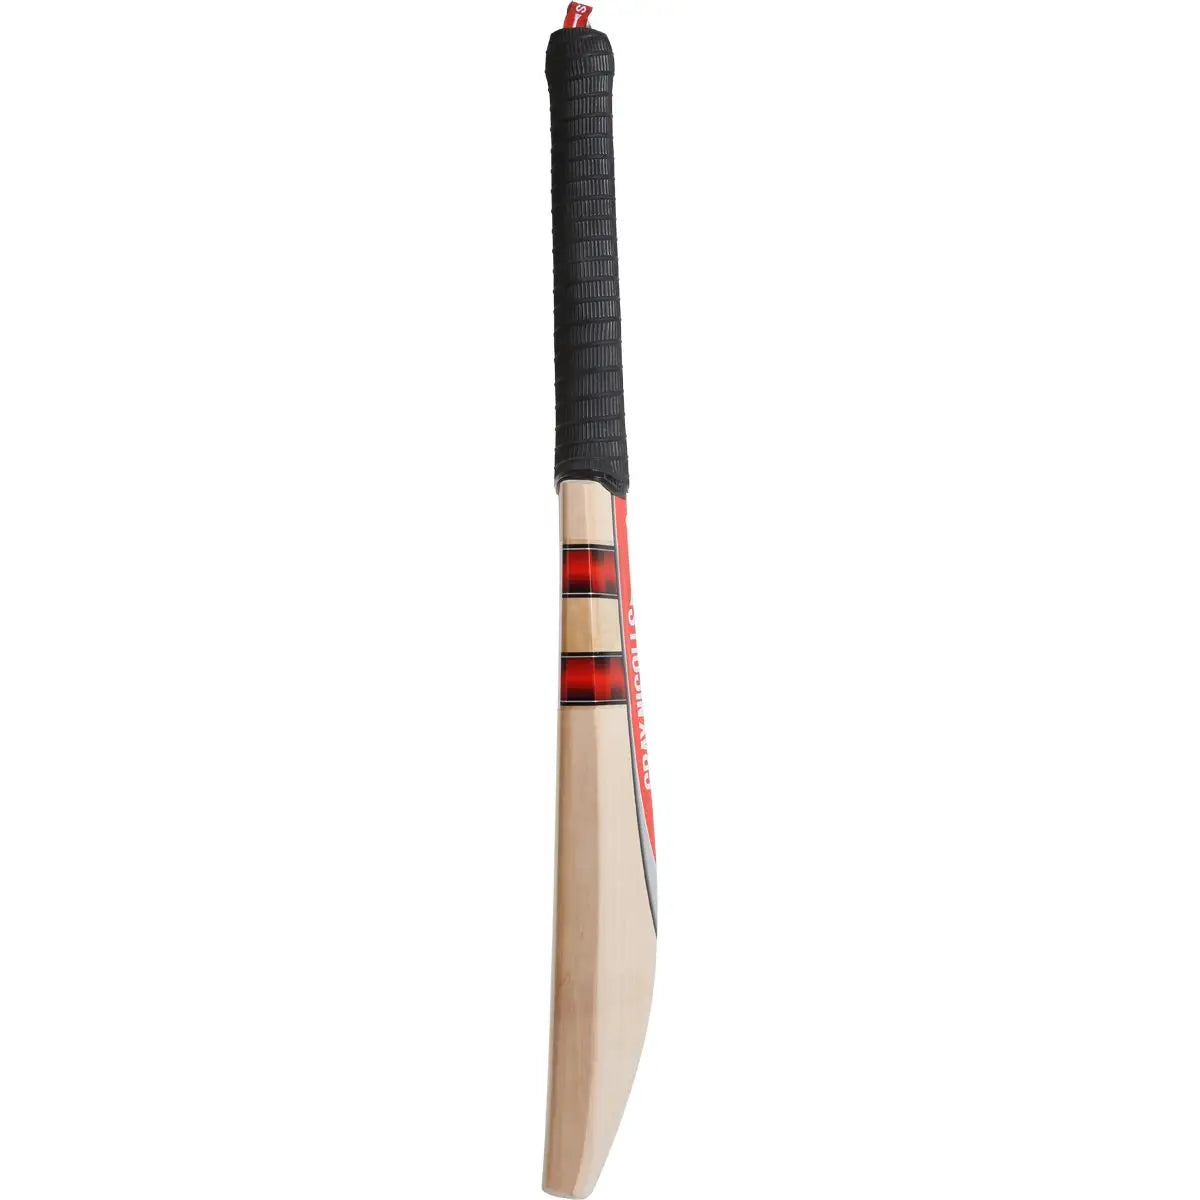 Cricket Bat for Fielding Practice Training Light Weight Short Blade Gray Nicolls - BATS - TRAINING